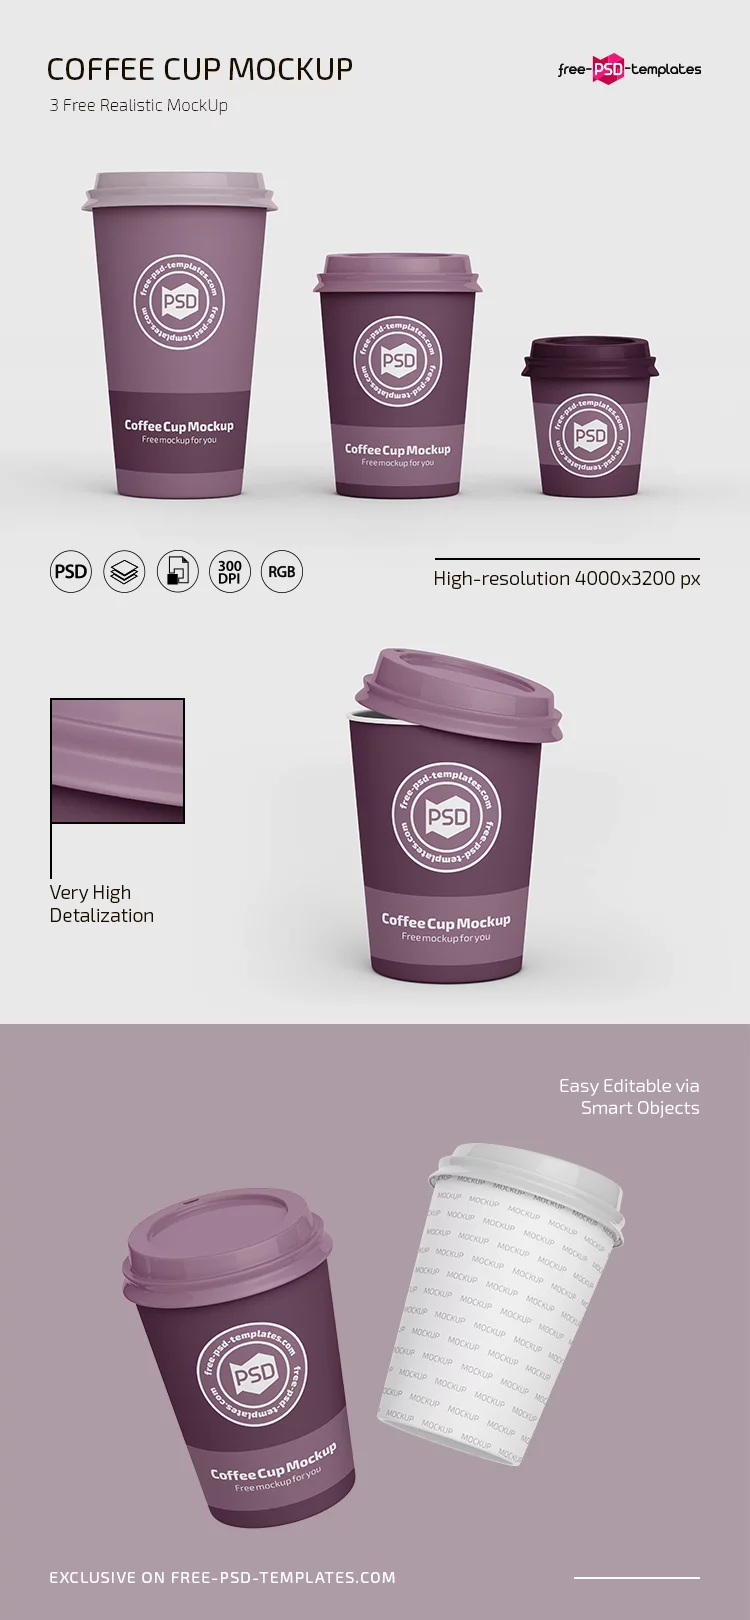 Free PSD Coffee Cup Mockup Templates